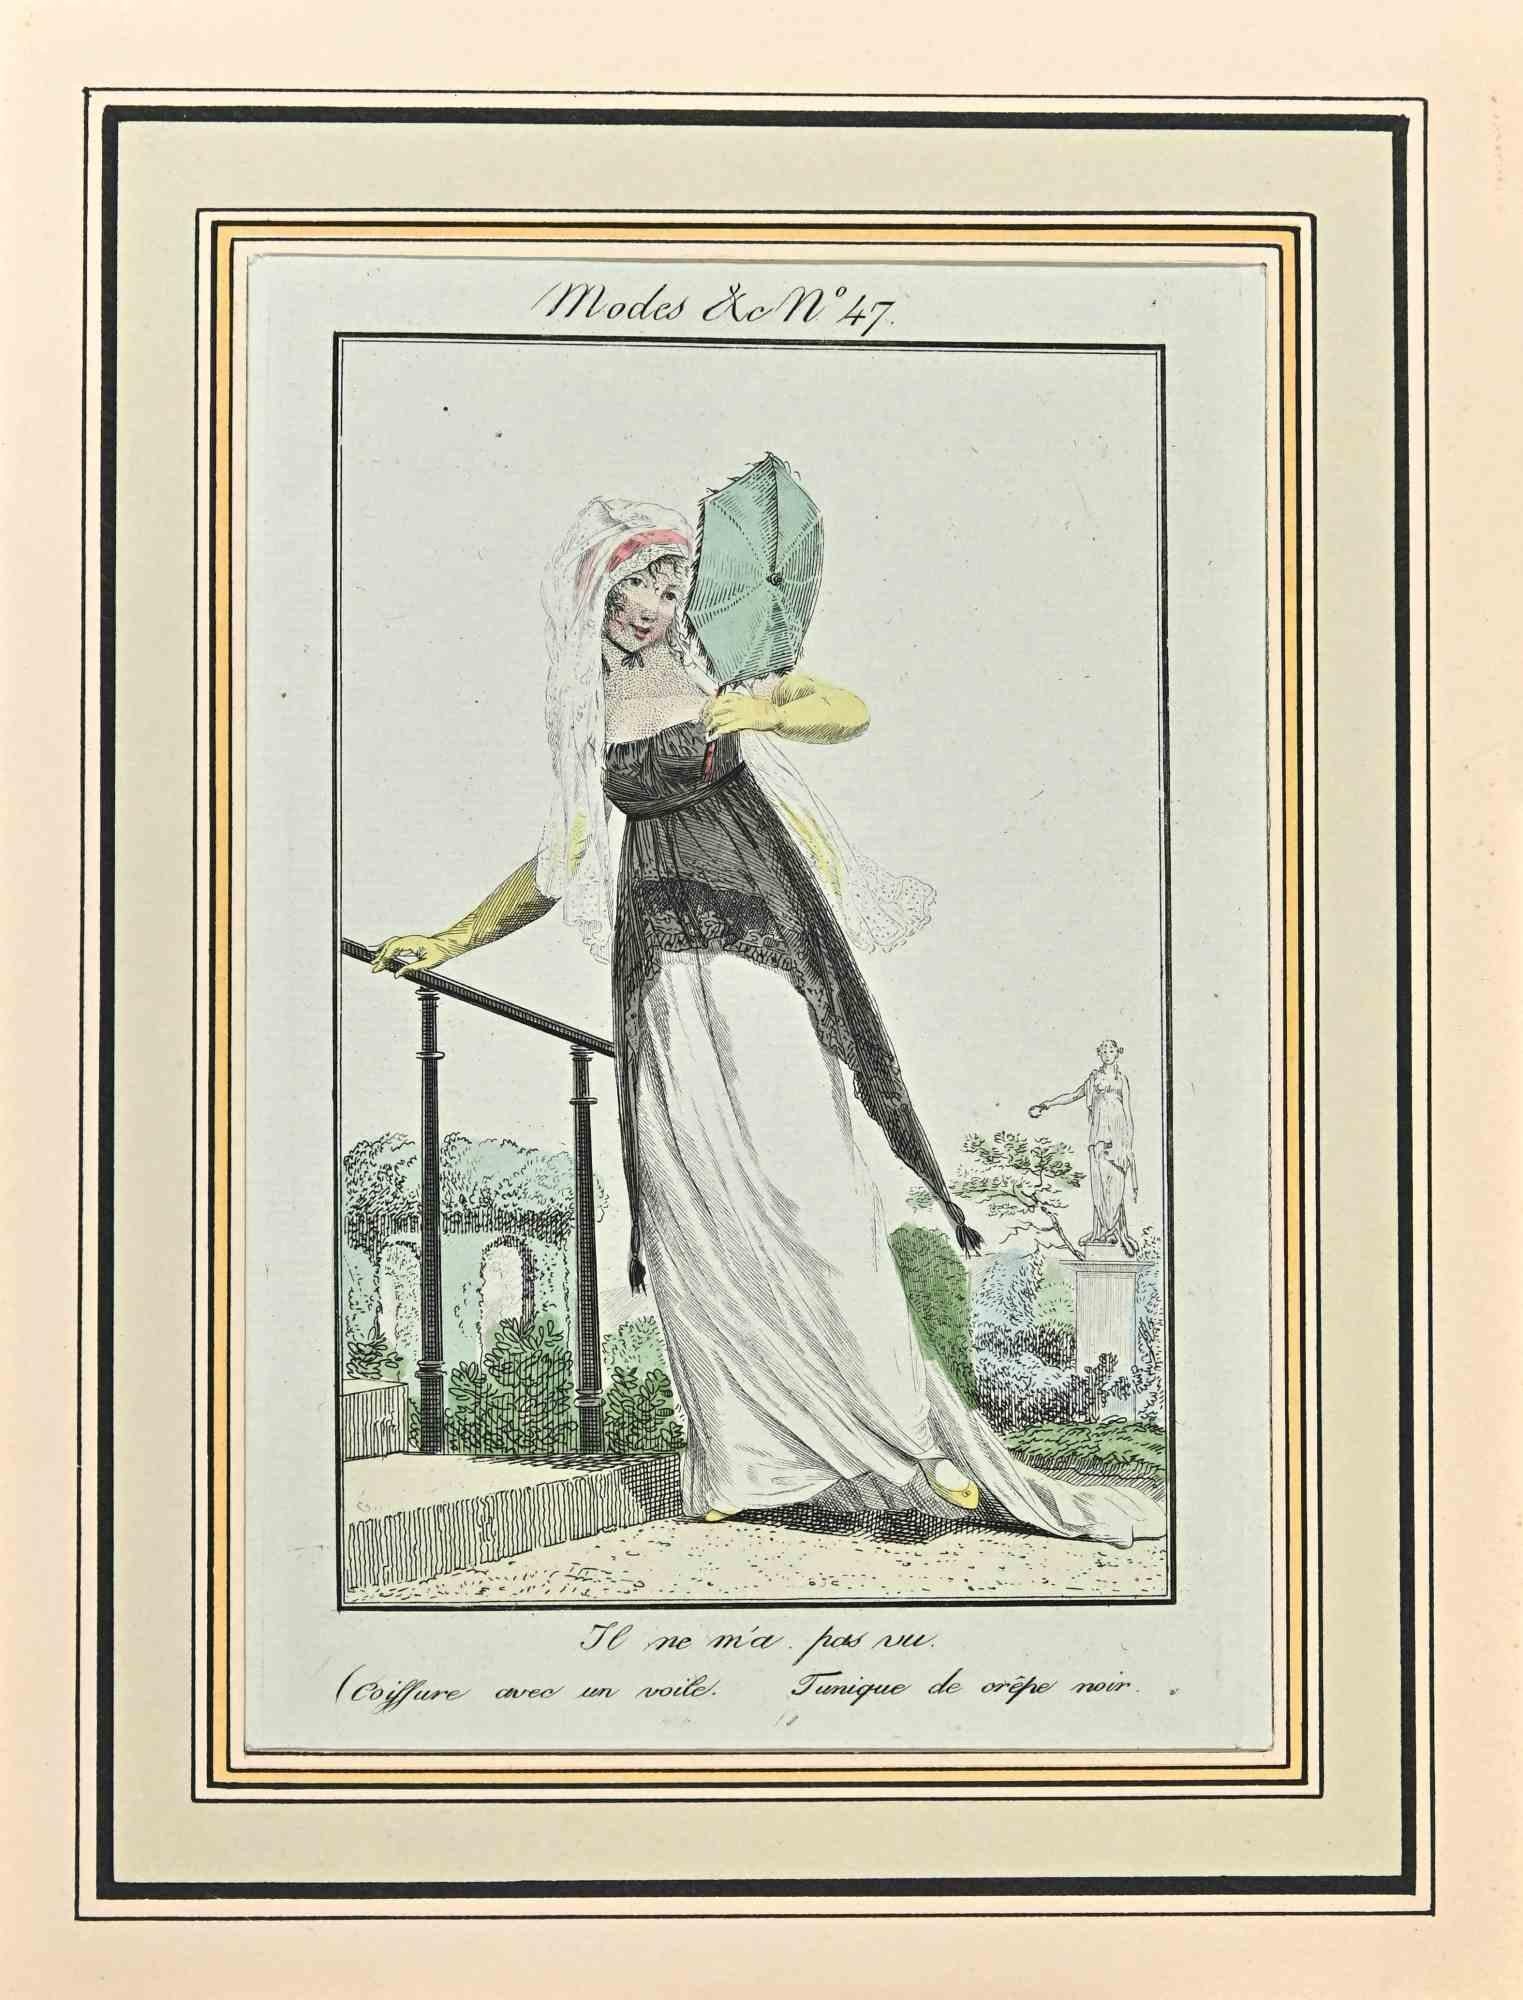 Il Ne M'A Pas Vu - Etching by Philibert-Louis Debucourt - 1797